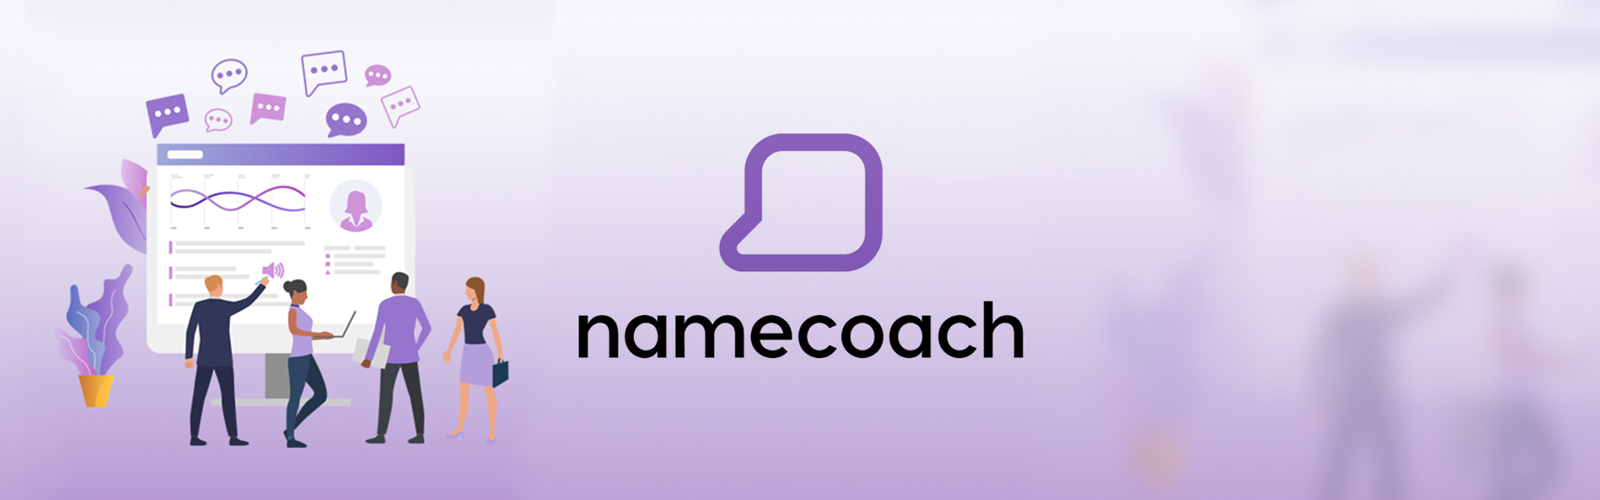 NameCoach